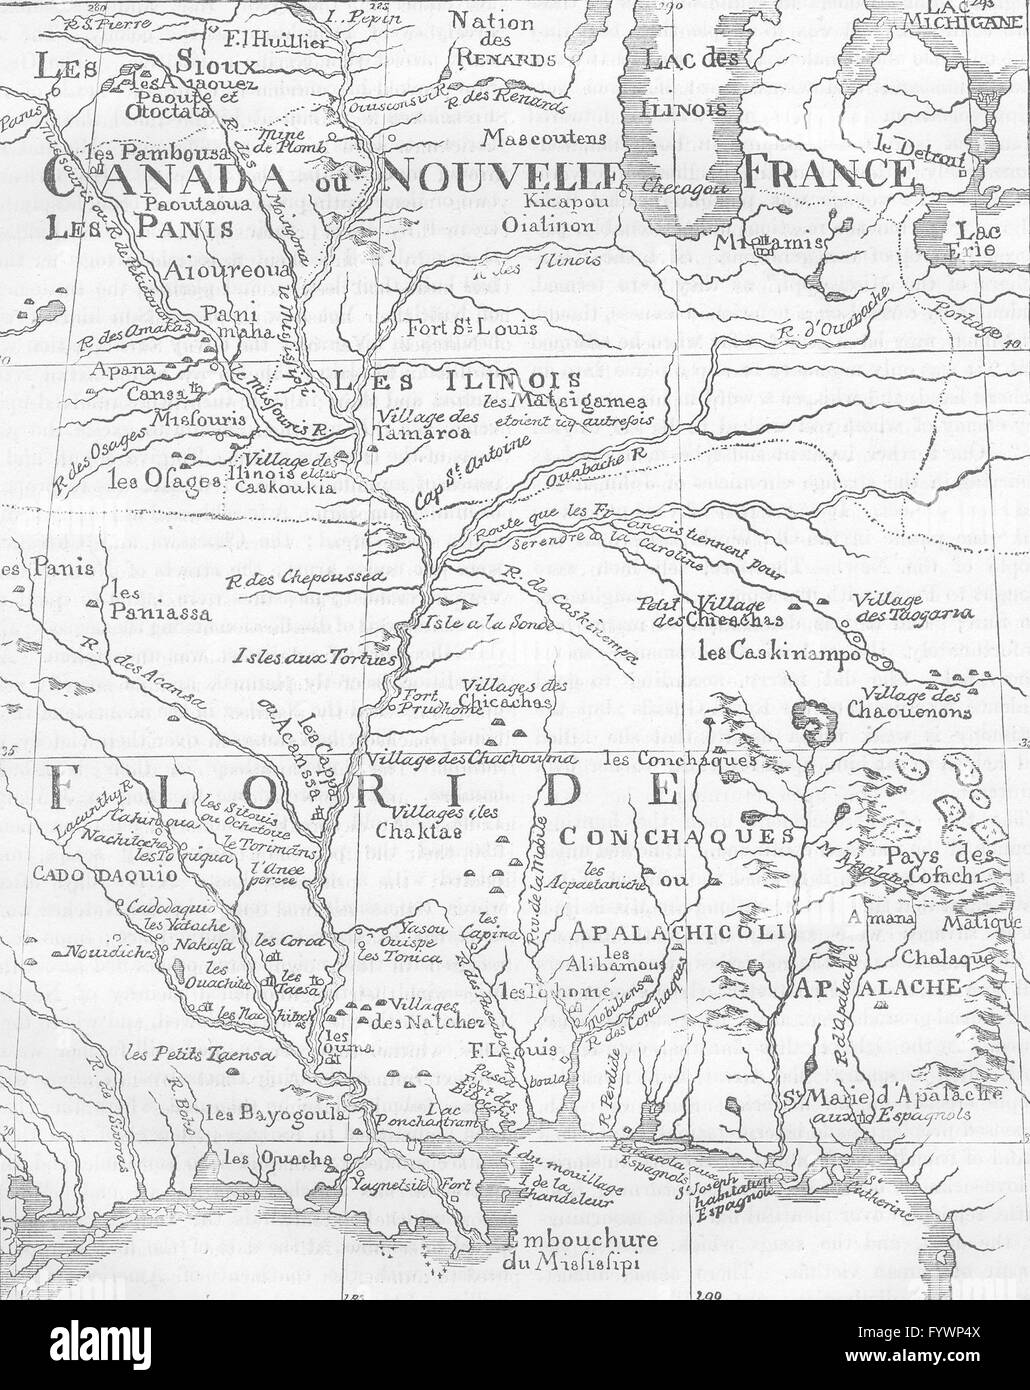 MISSISSIPPI: Natürlich, c1880 Antike Landkarte Stockfoto